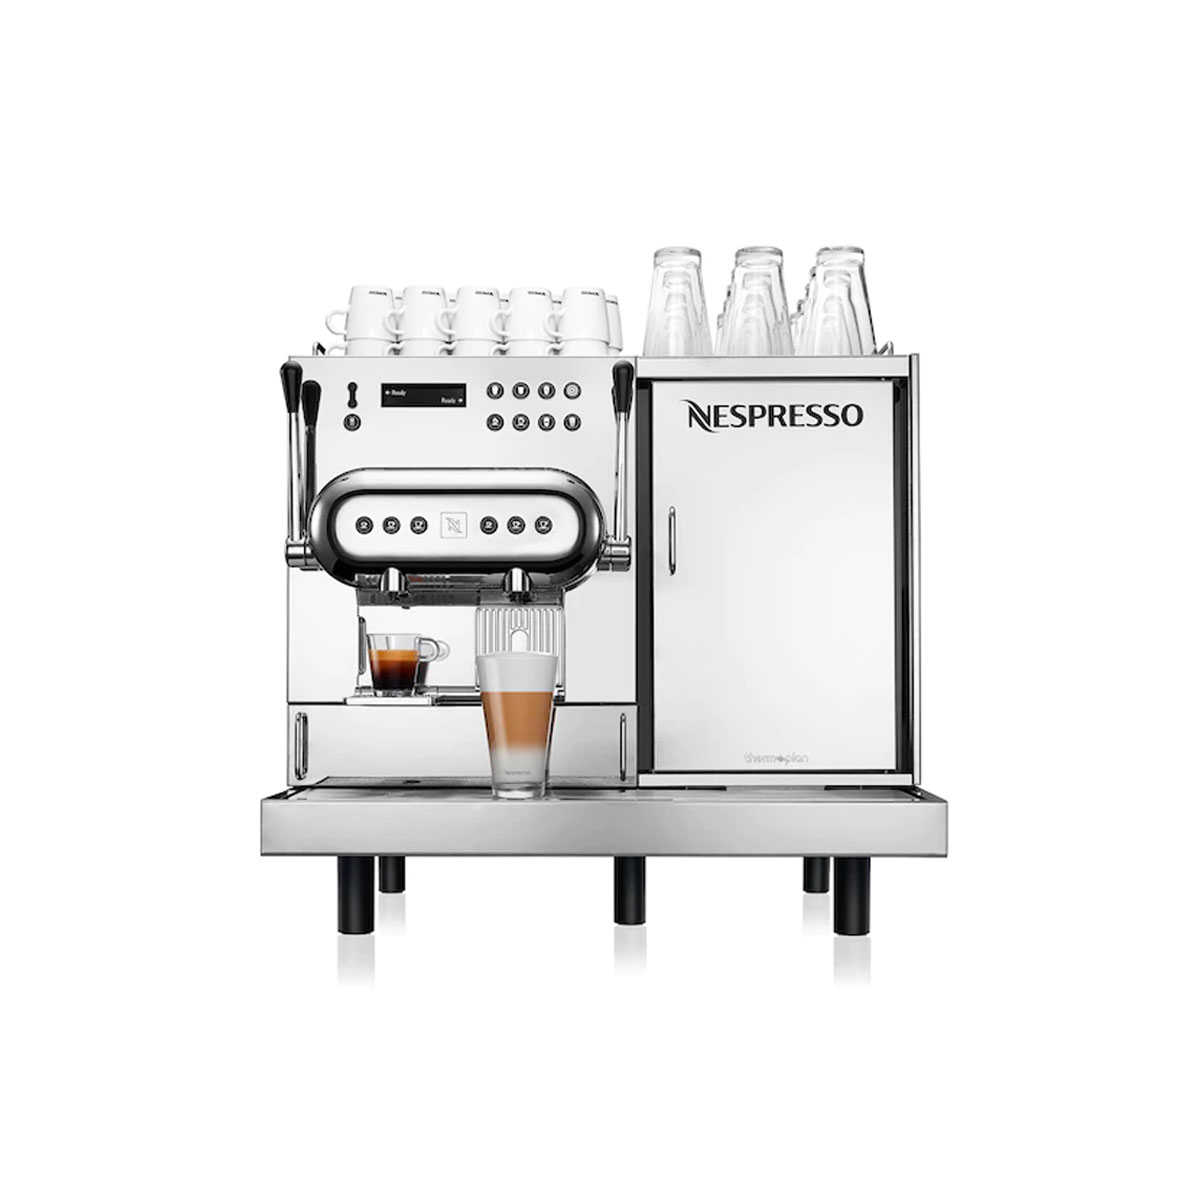 Nespresso office coffee machine